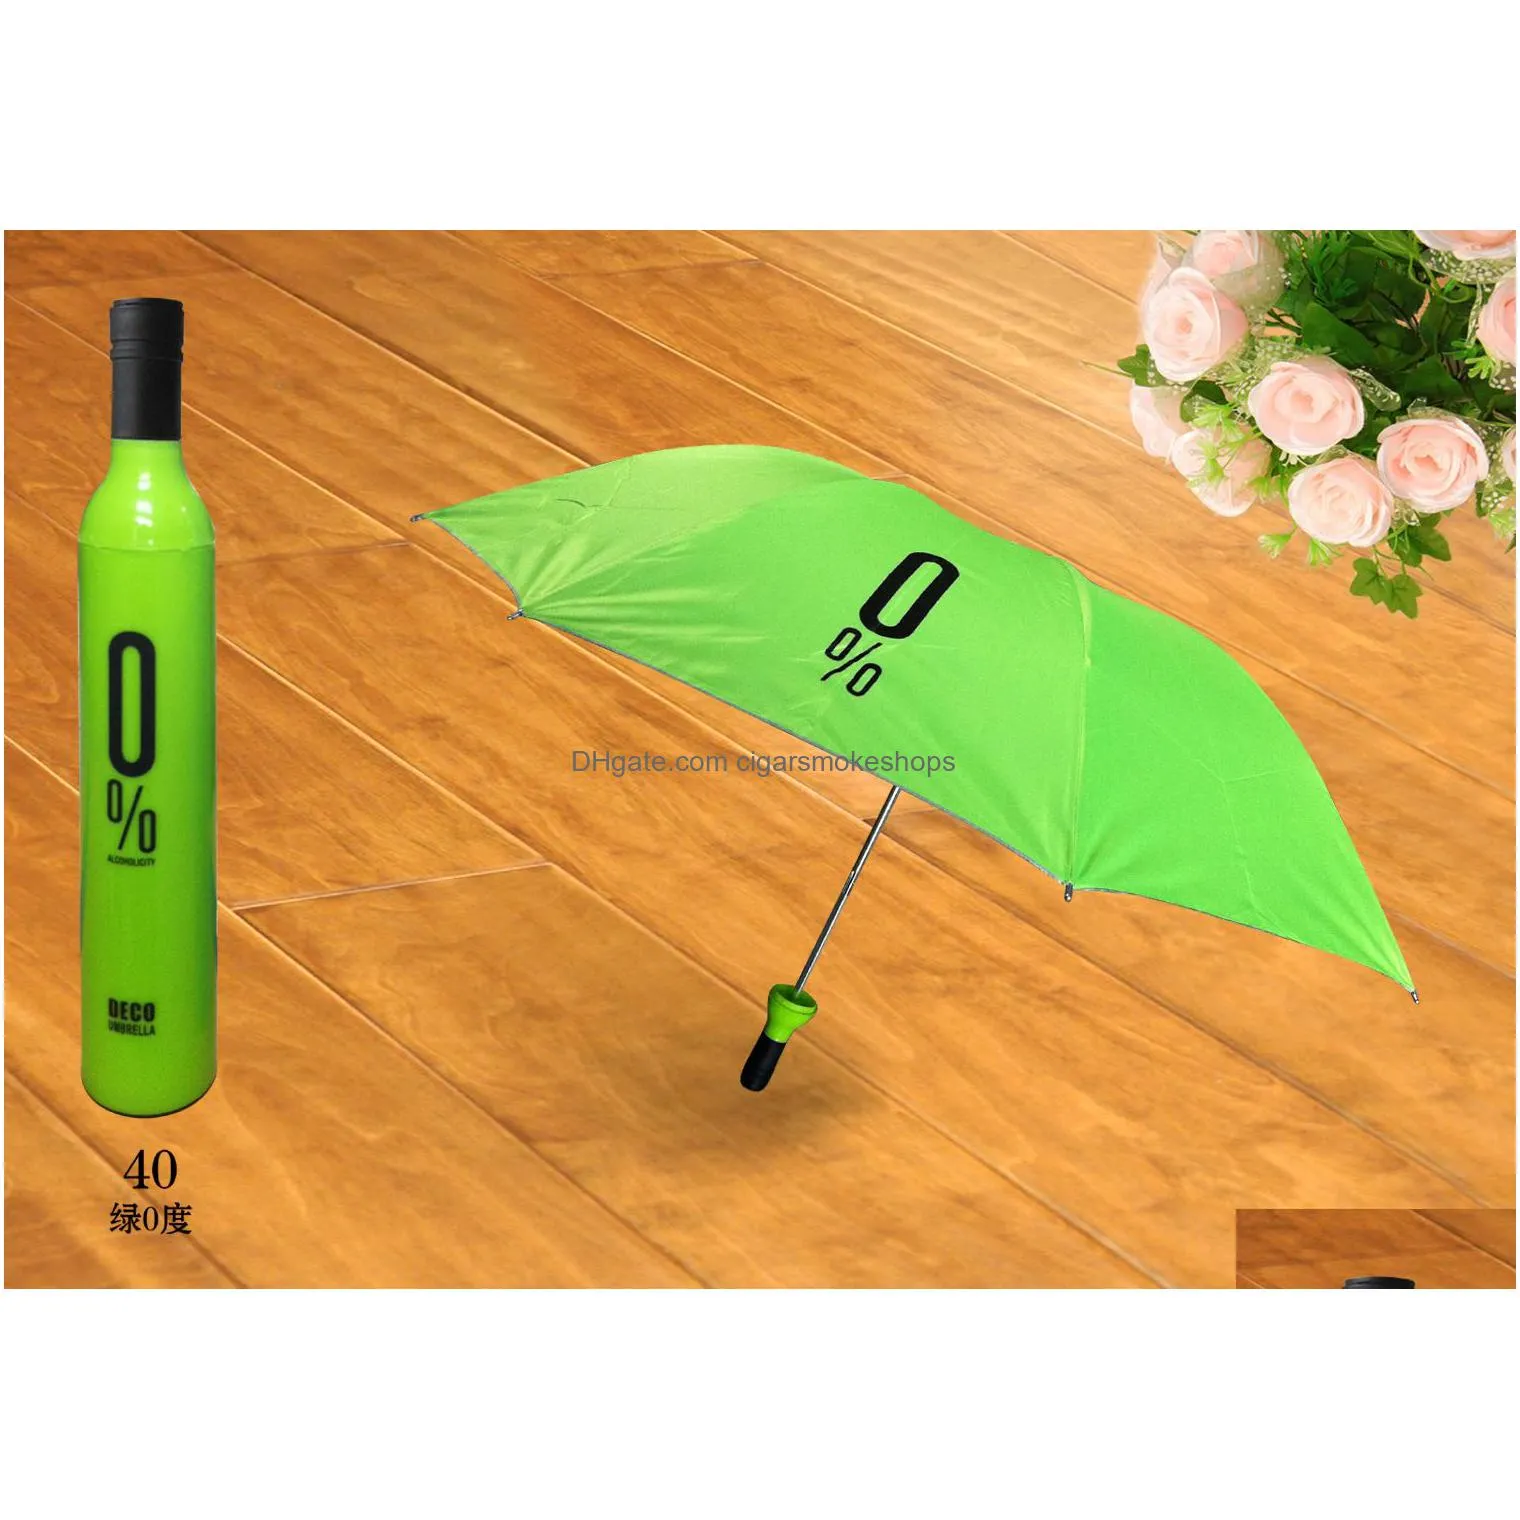 Umbrellas Fashion Umbrellas Wine Bottle Umbrella 3-Folding Creative Styles For Choosing Home Garden Household Sundries Dh1Uv